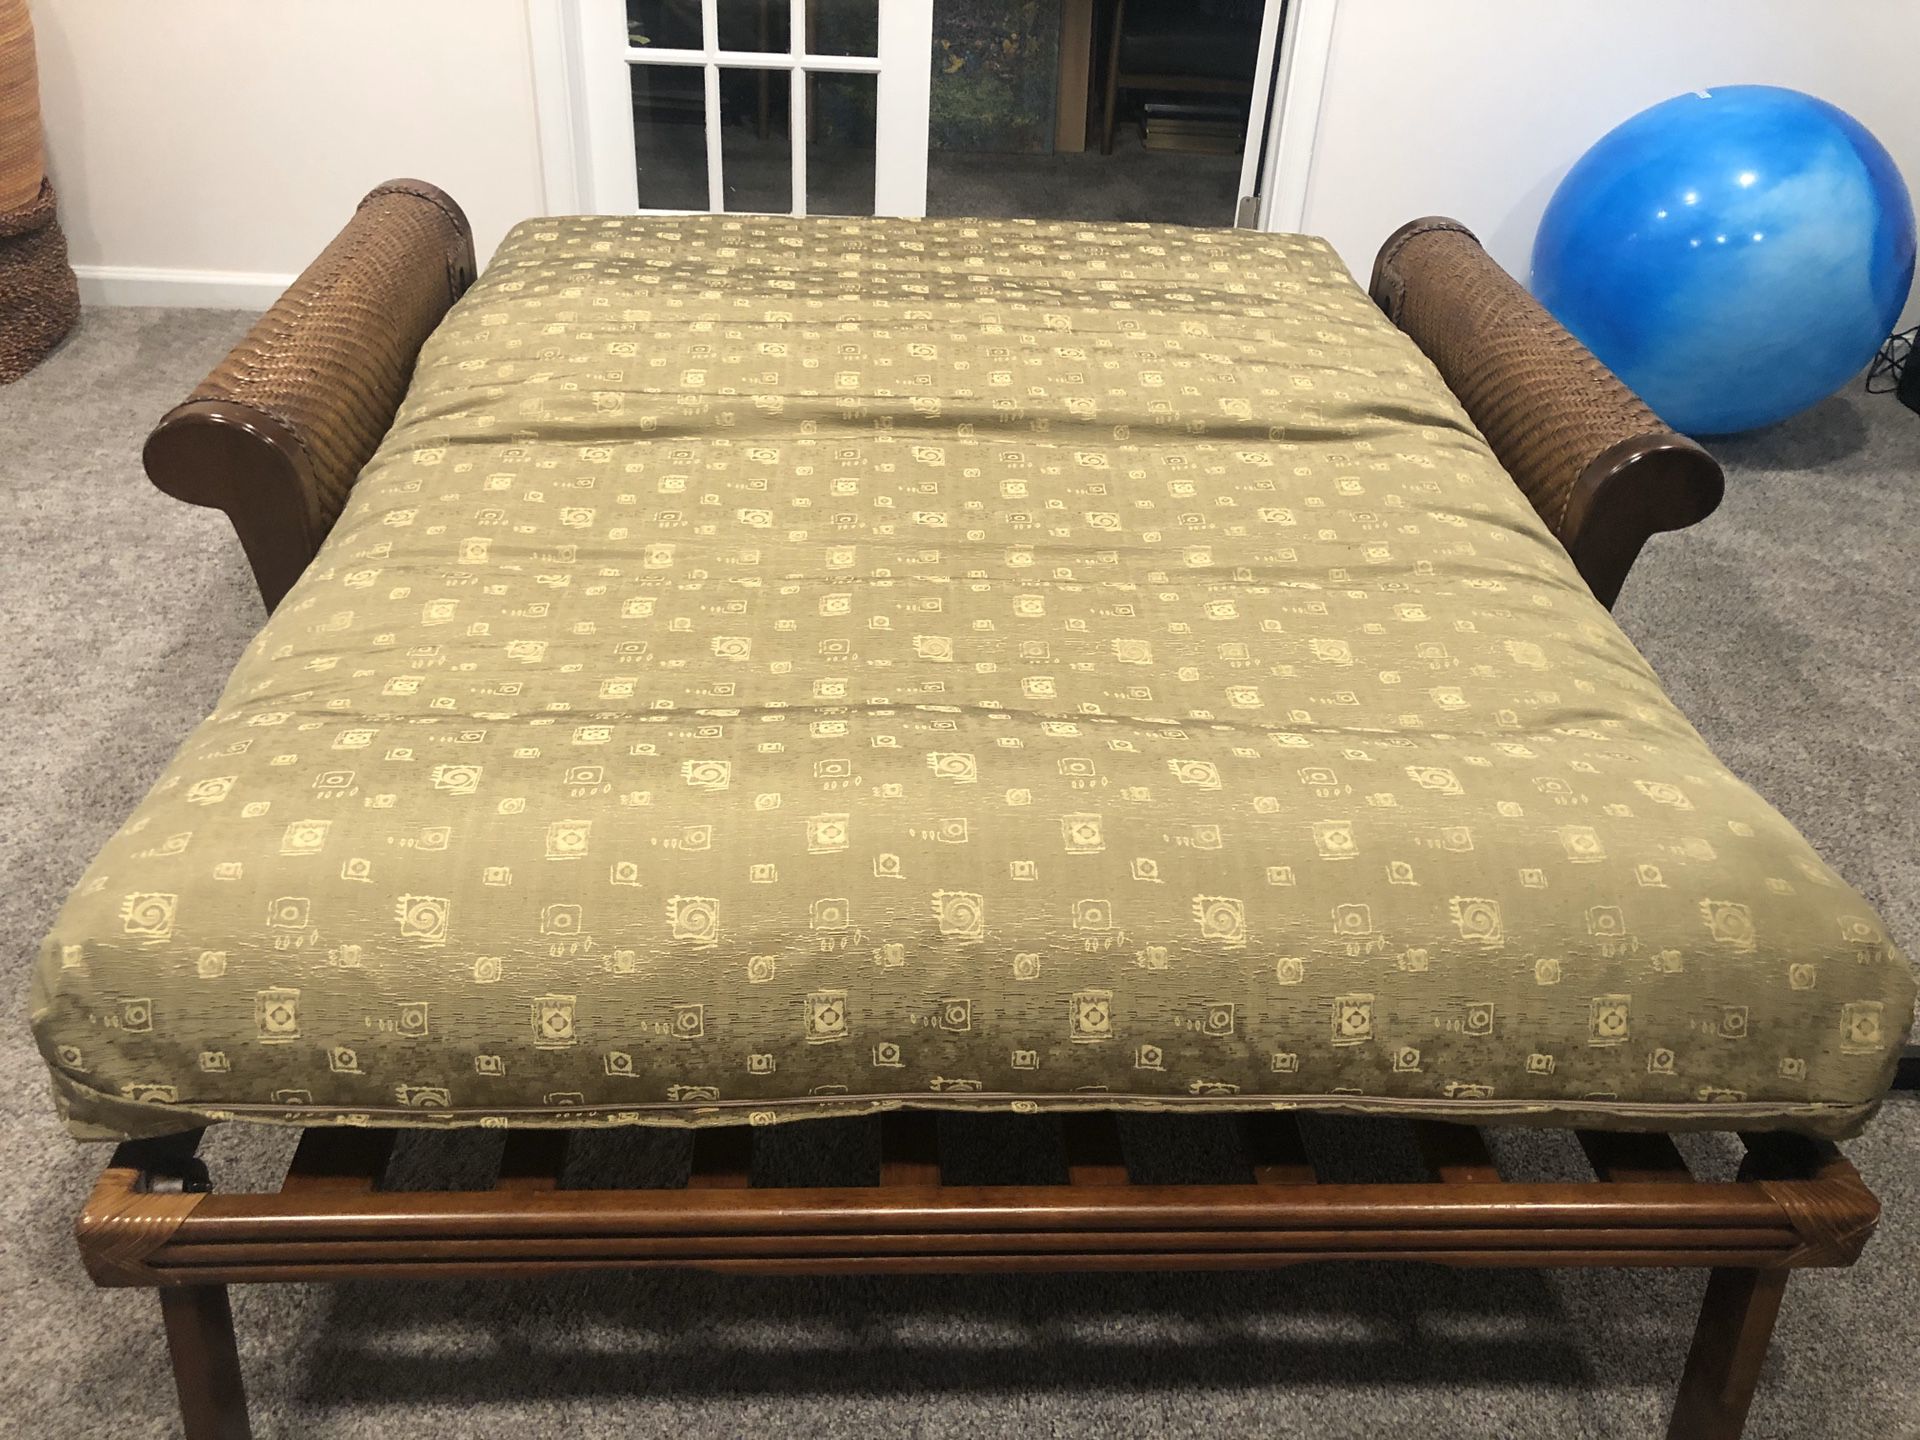 Full sized futon